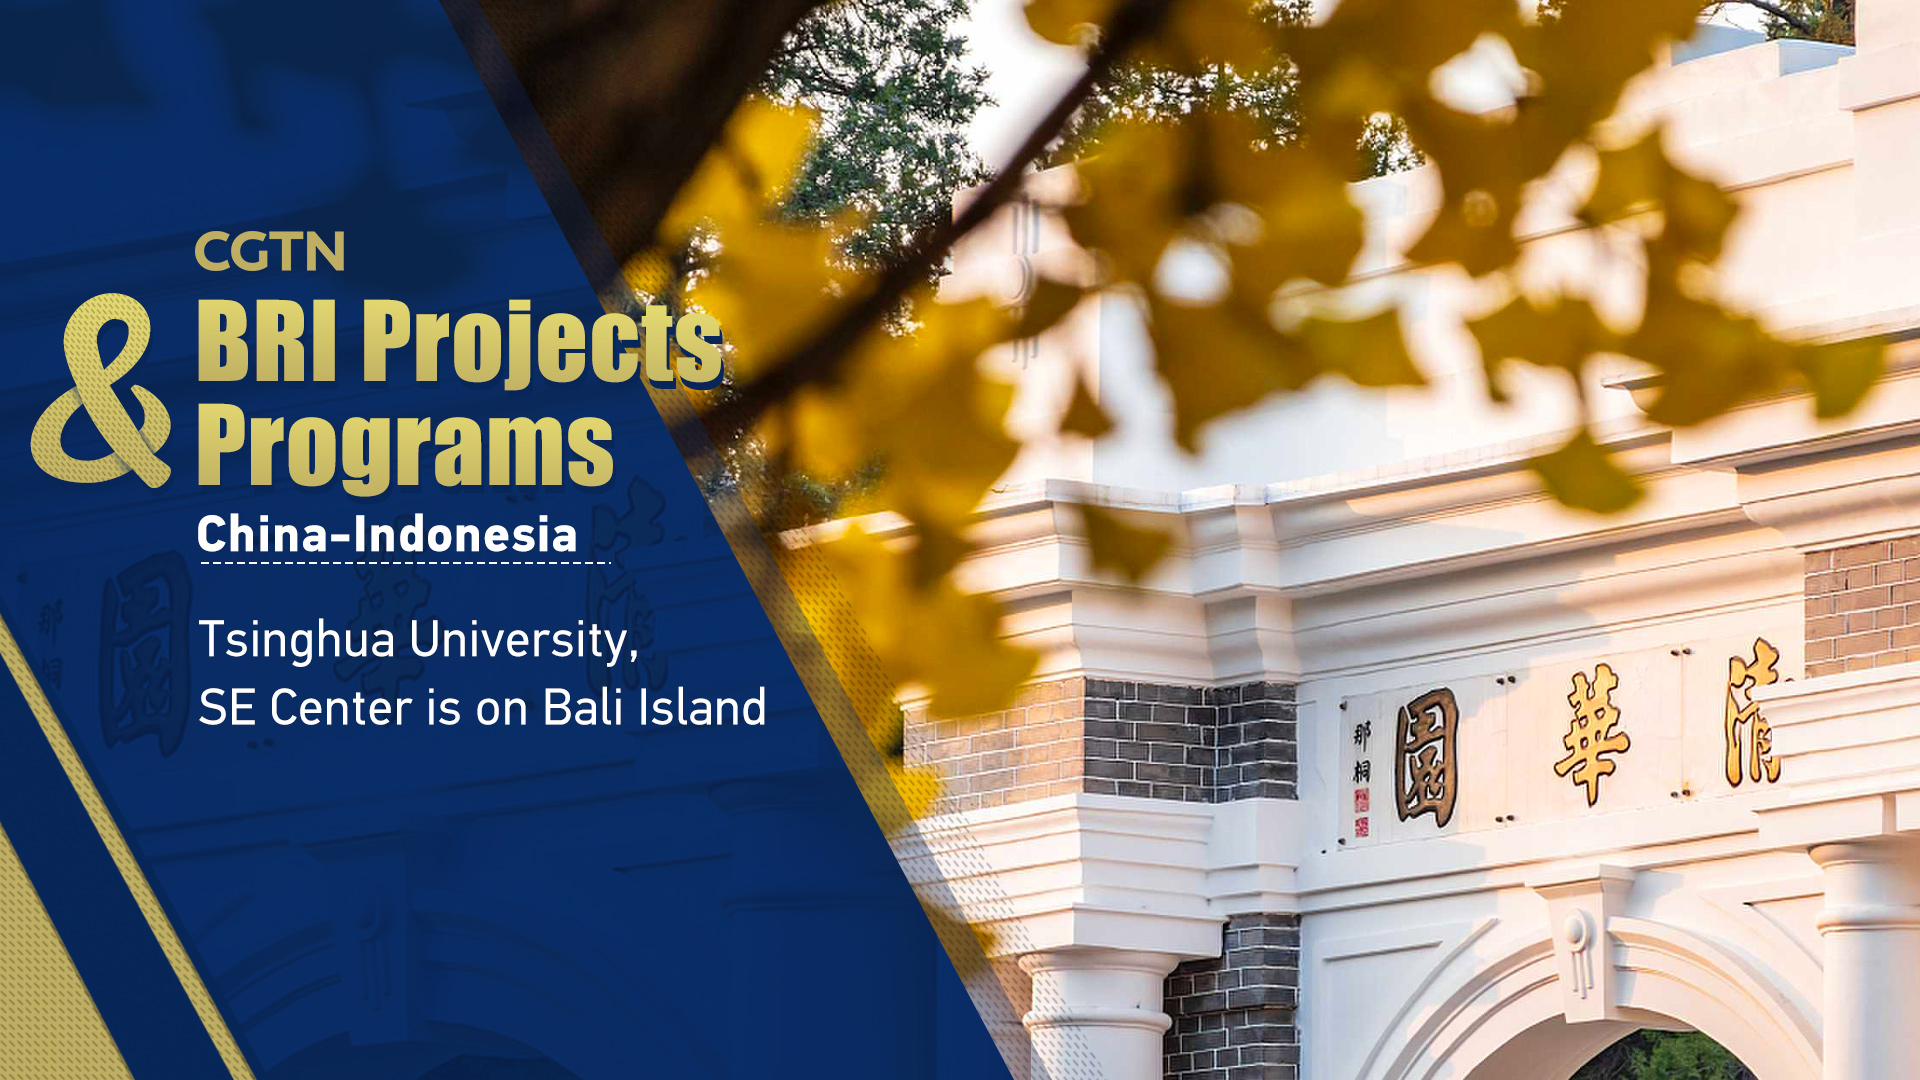 BRI Projects & Programs: Tsinghua University Southeast Asia Center in Bali, Indonesia